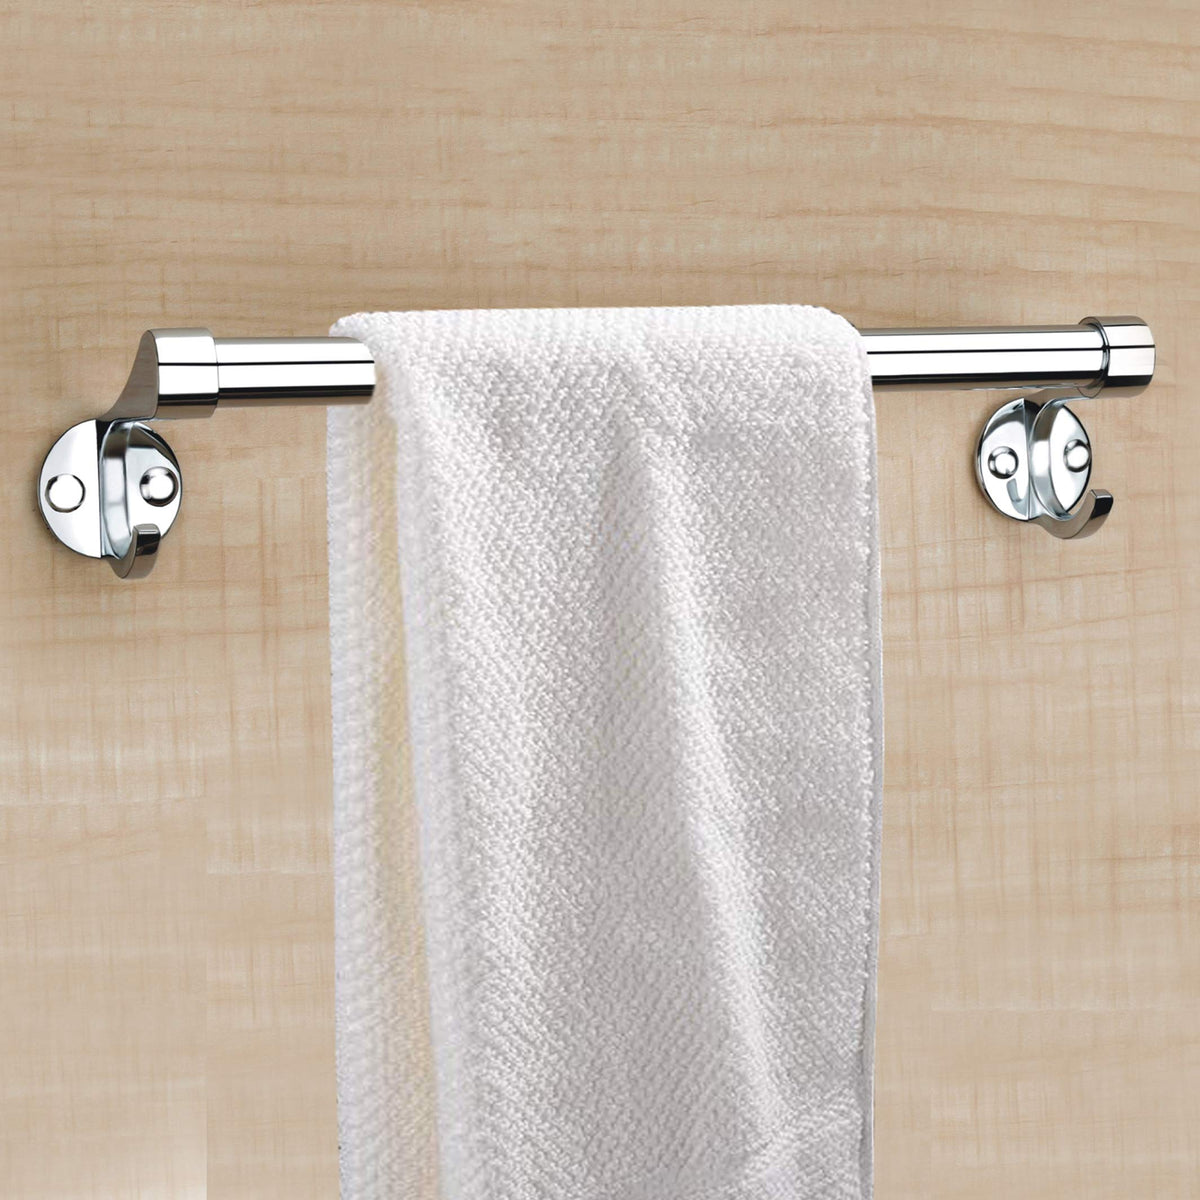 Plantex Stainless Steel Towel Hanger for Bathroom/Towel Rod/Bar/Bathroom Accessories(18 Inch-Chrome)